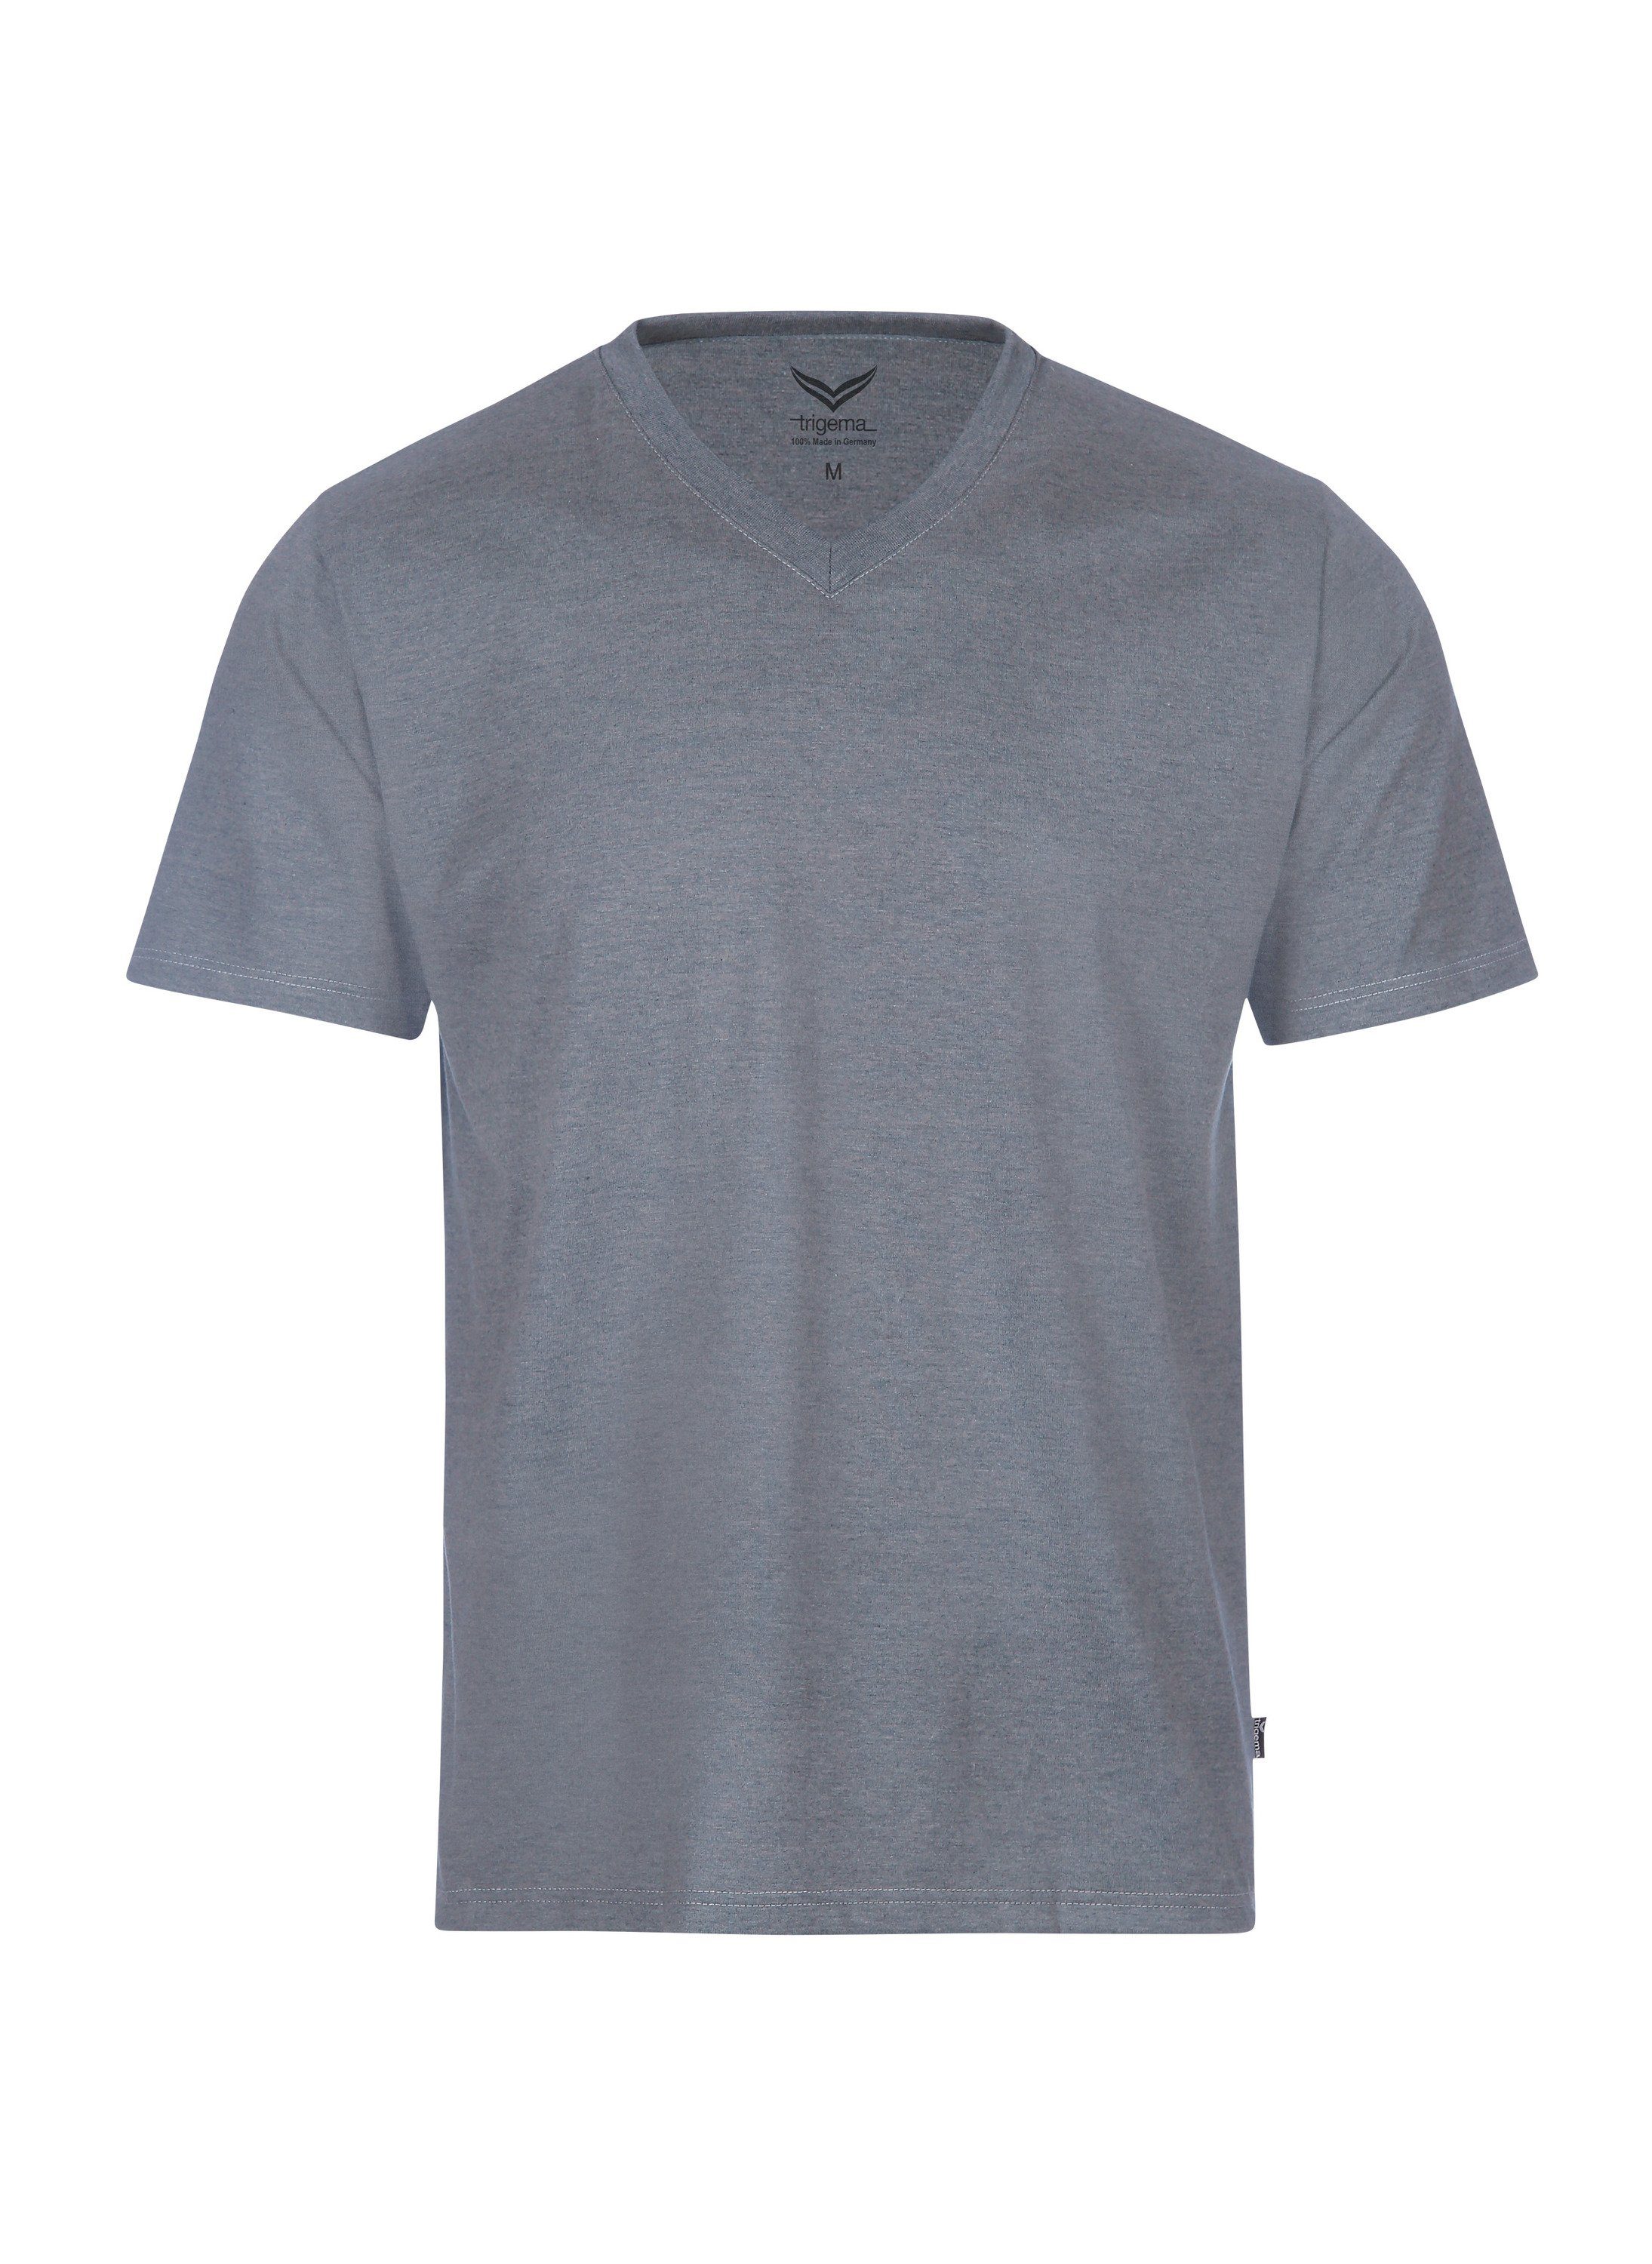 Trigema T-Shirt steingrau-melange Baumwolle V-Shirt DELUXE TRIGEMA